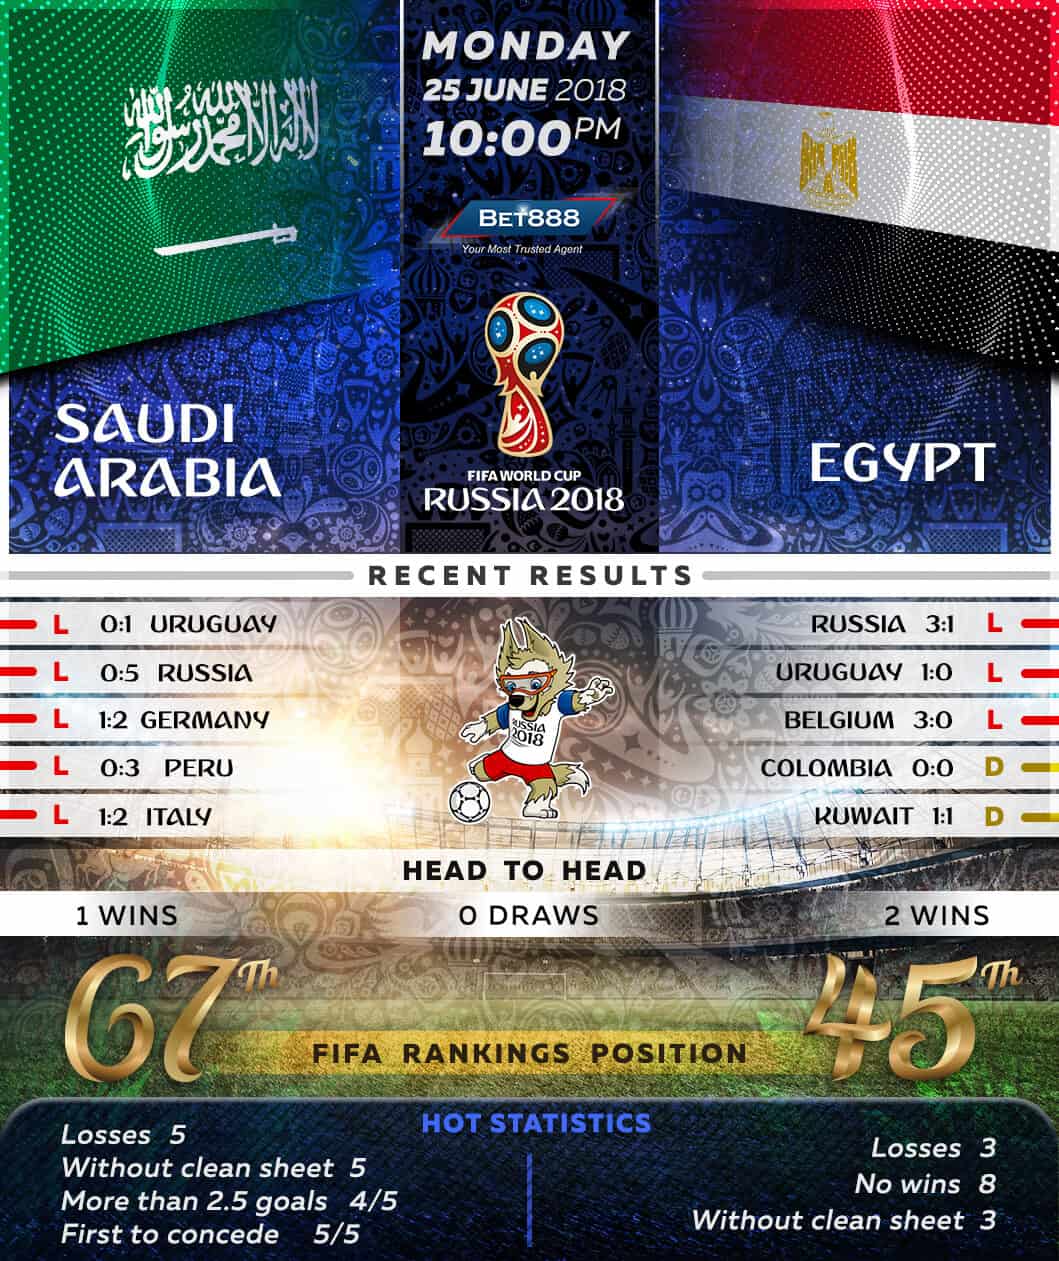 Egypt vs Saudi Arabia 25/06/18